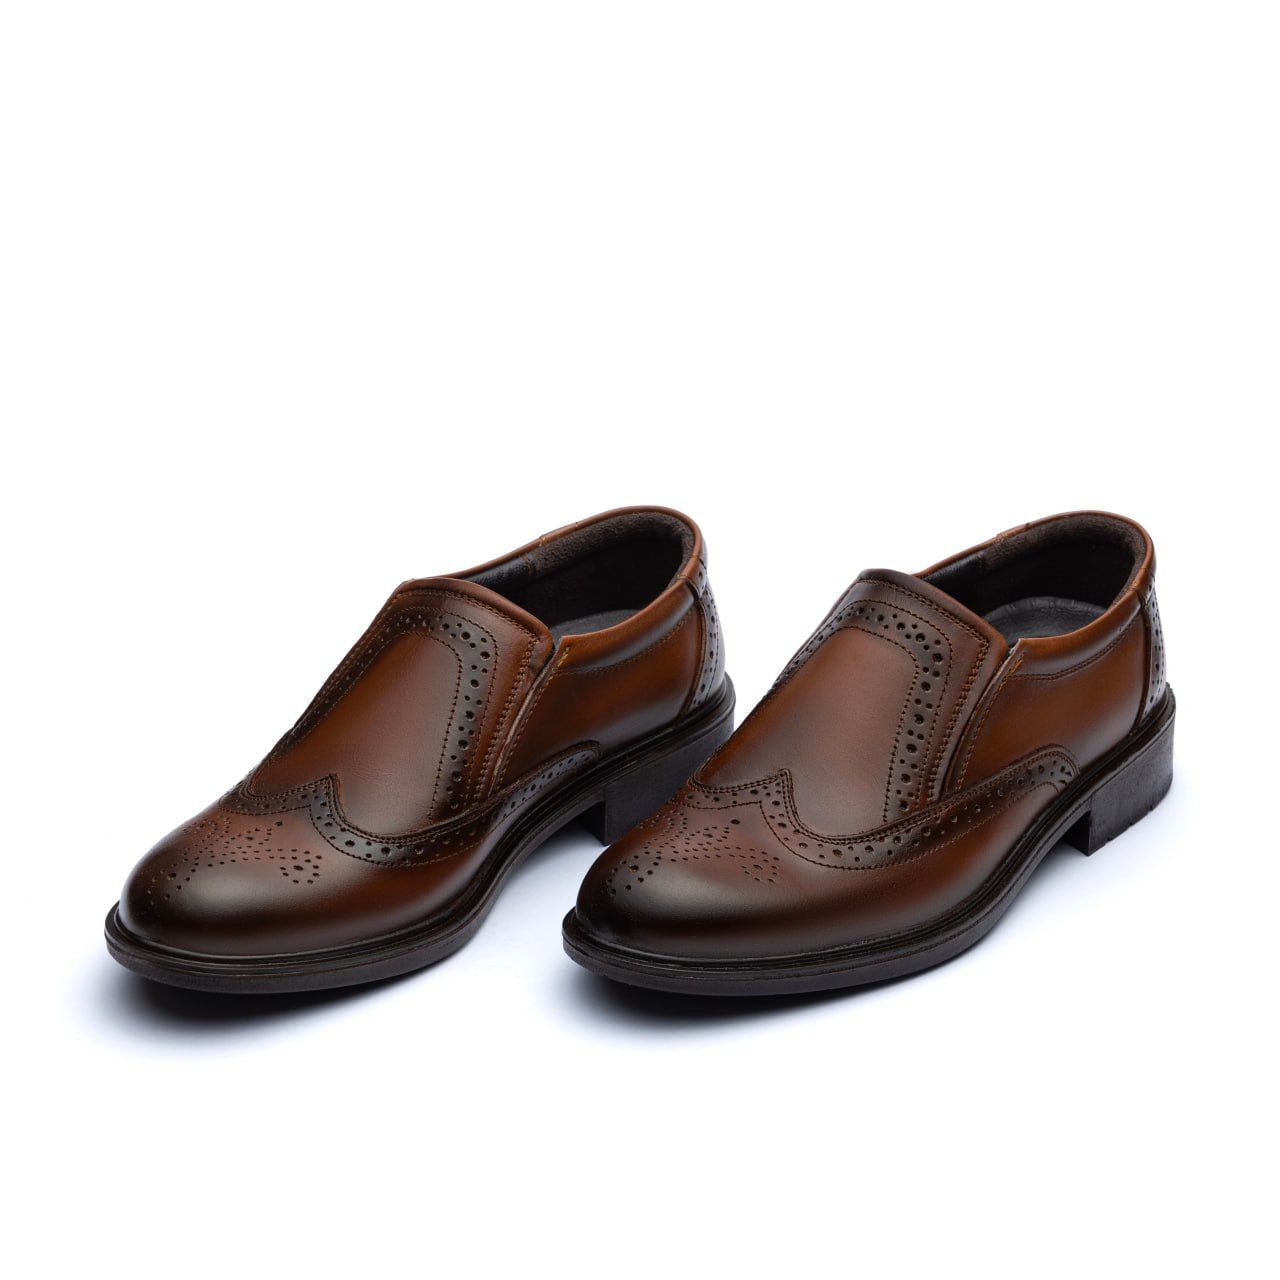 کفش چرم مجلسی مردانه مدل هشترگ زیره تزریق کد K7501